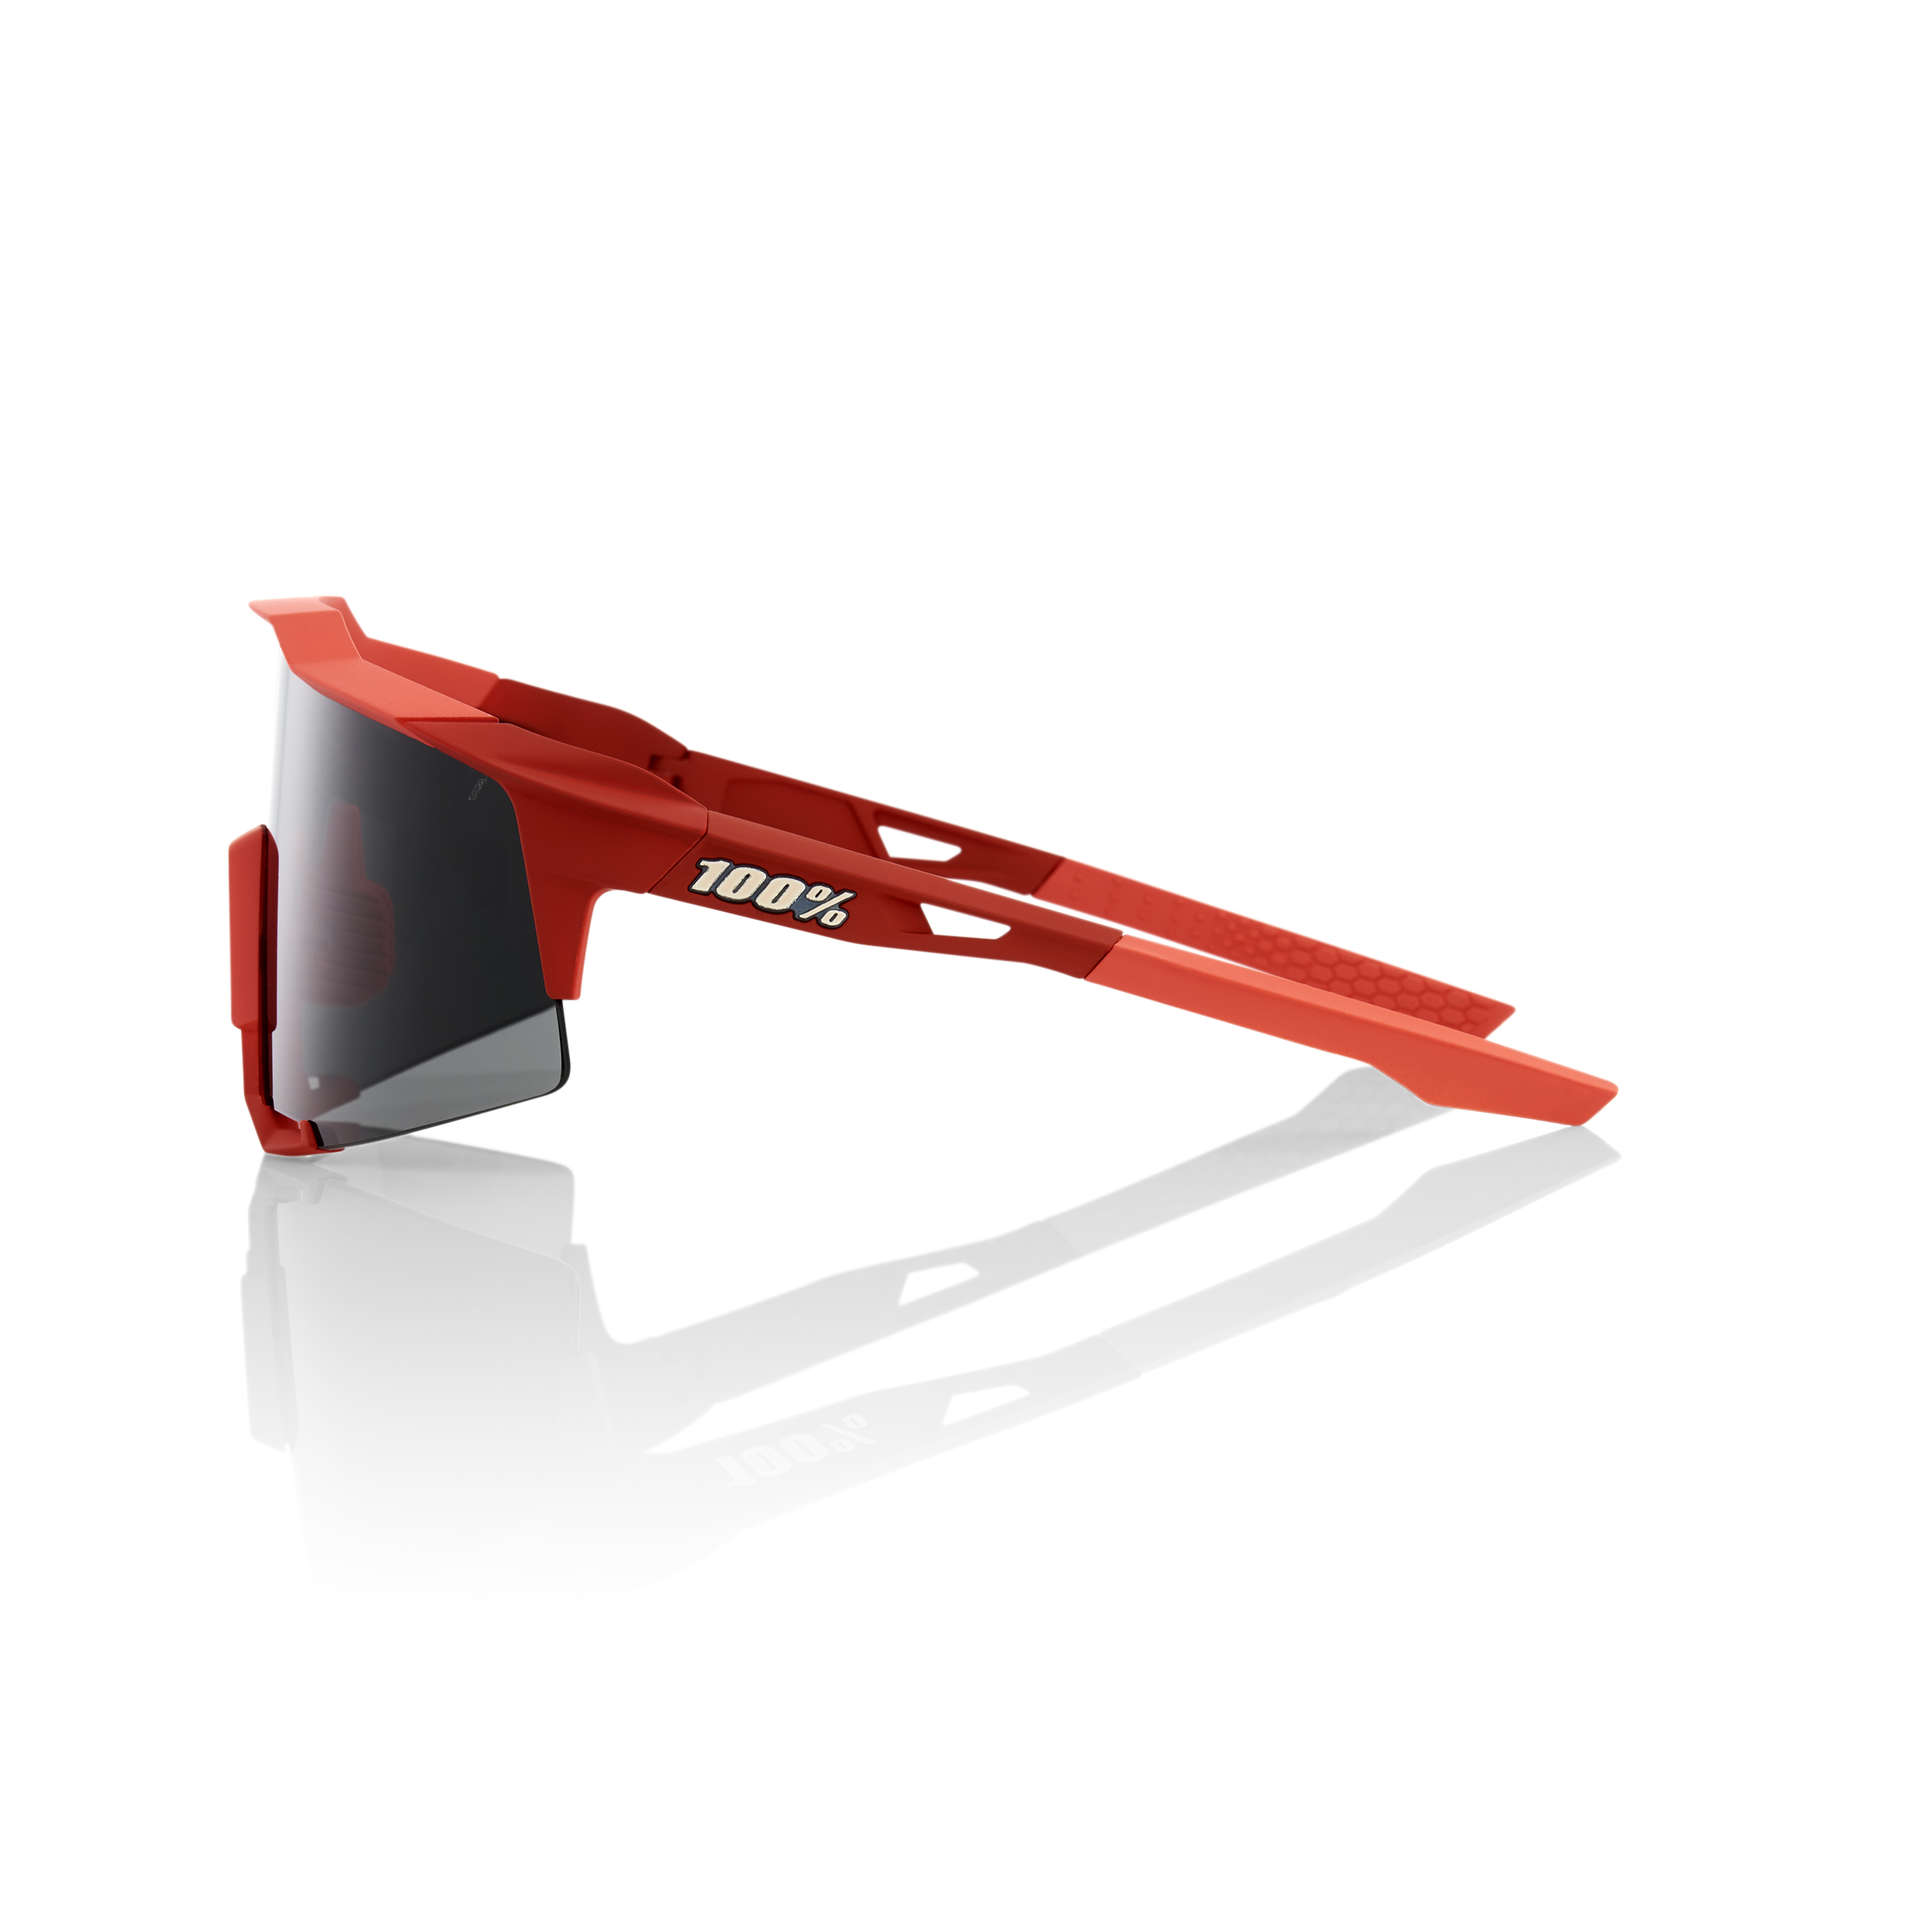 100% Speedcraft Sport Zonnebril Soft Tact Coral met Black Mirror Lens